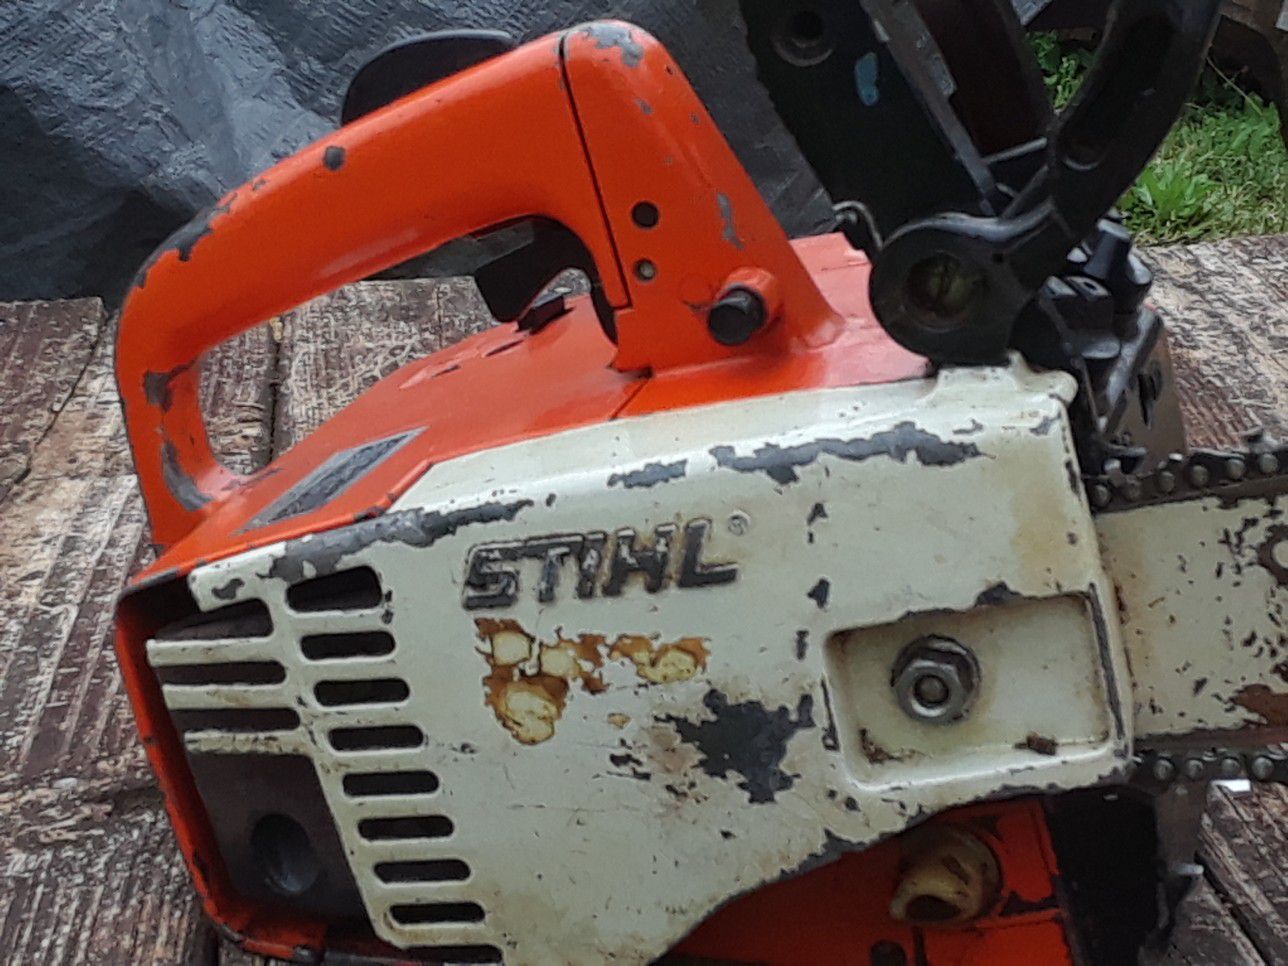 Stihl 015L chainsaw